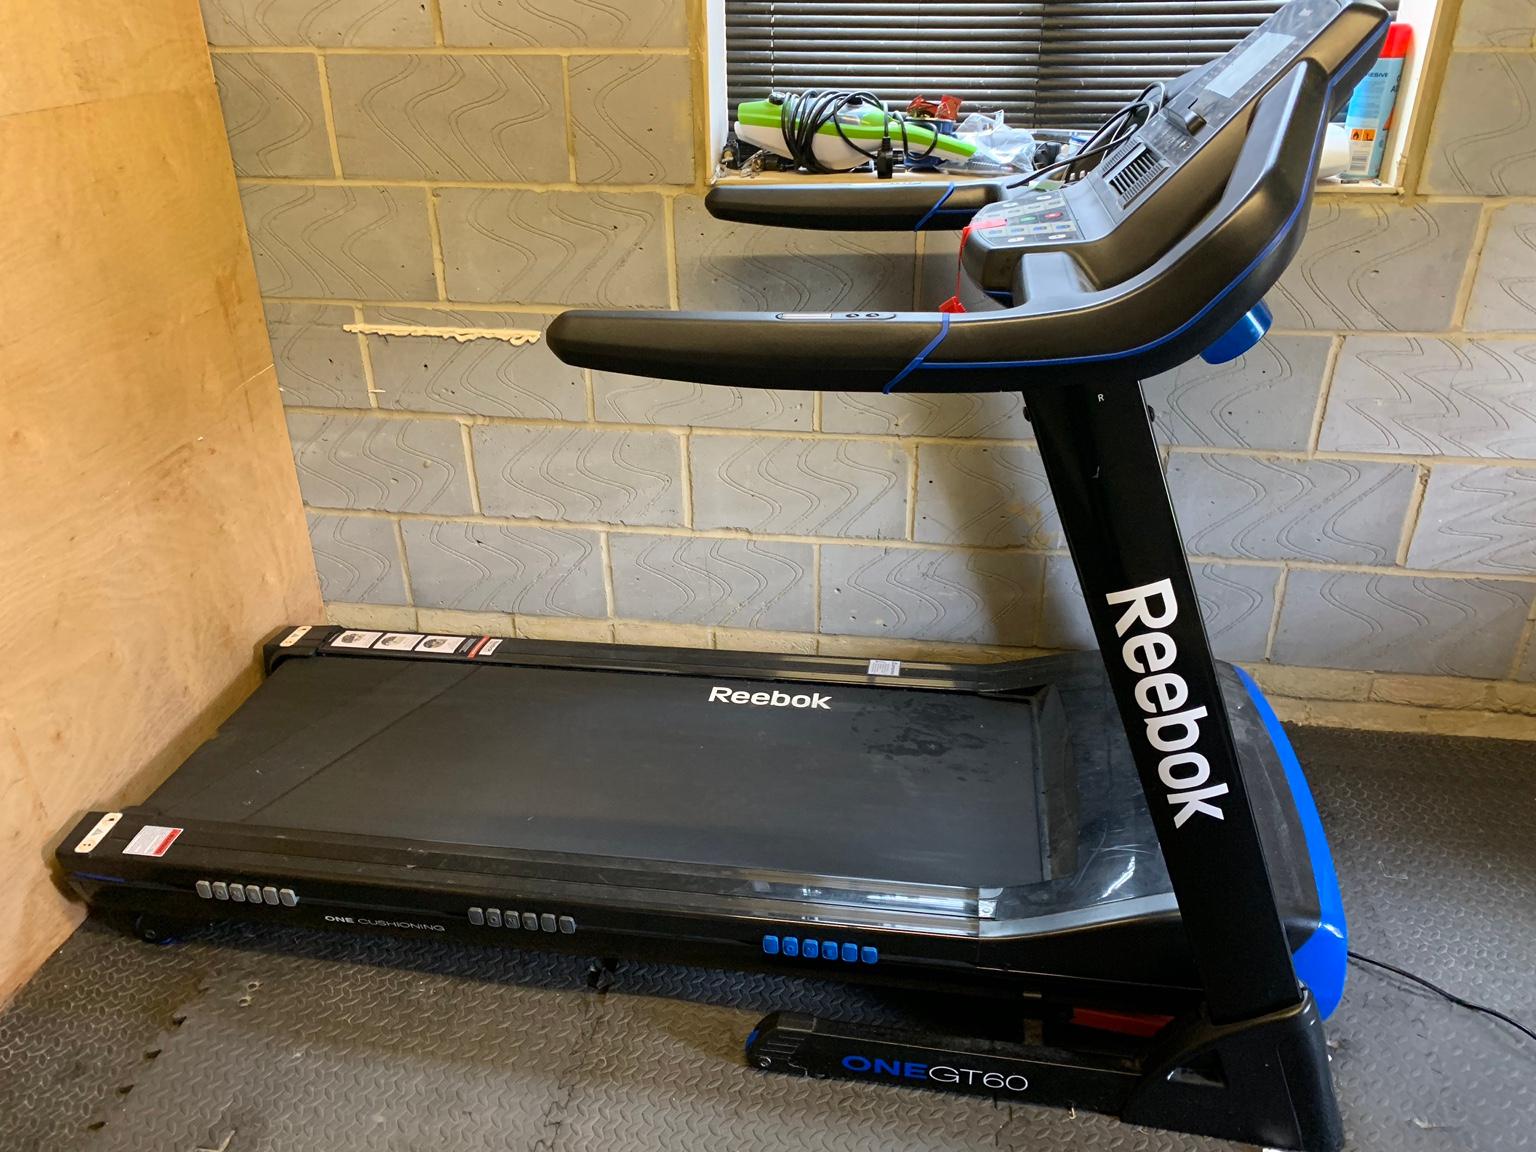 reebok one gt60 treadmill